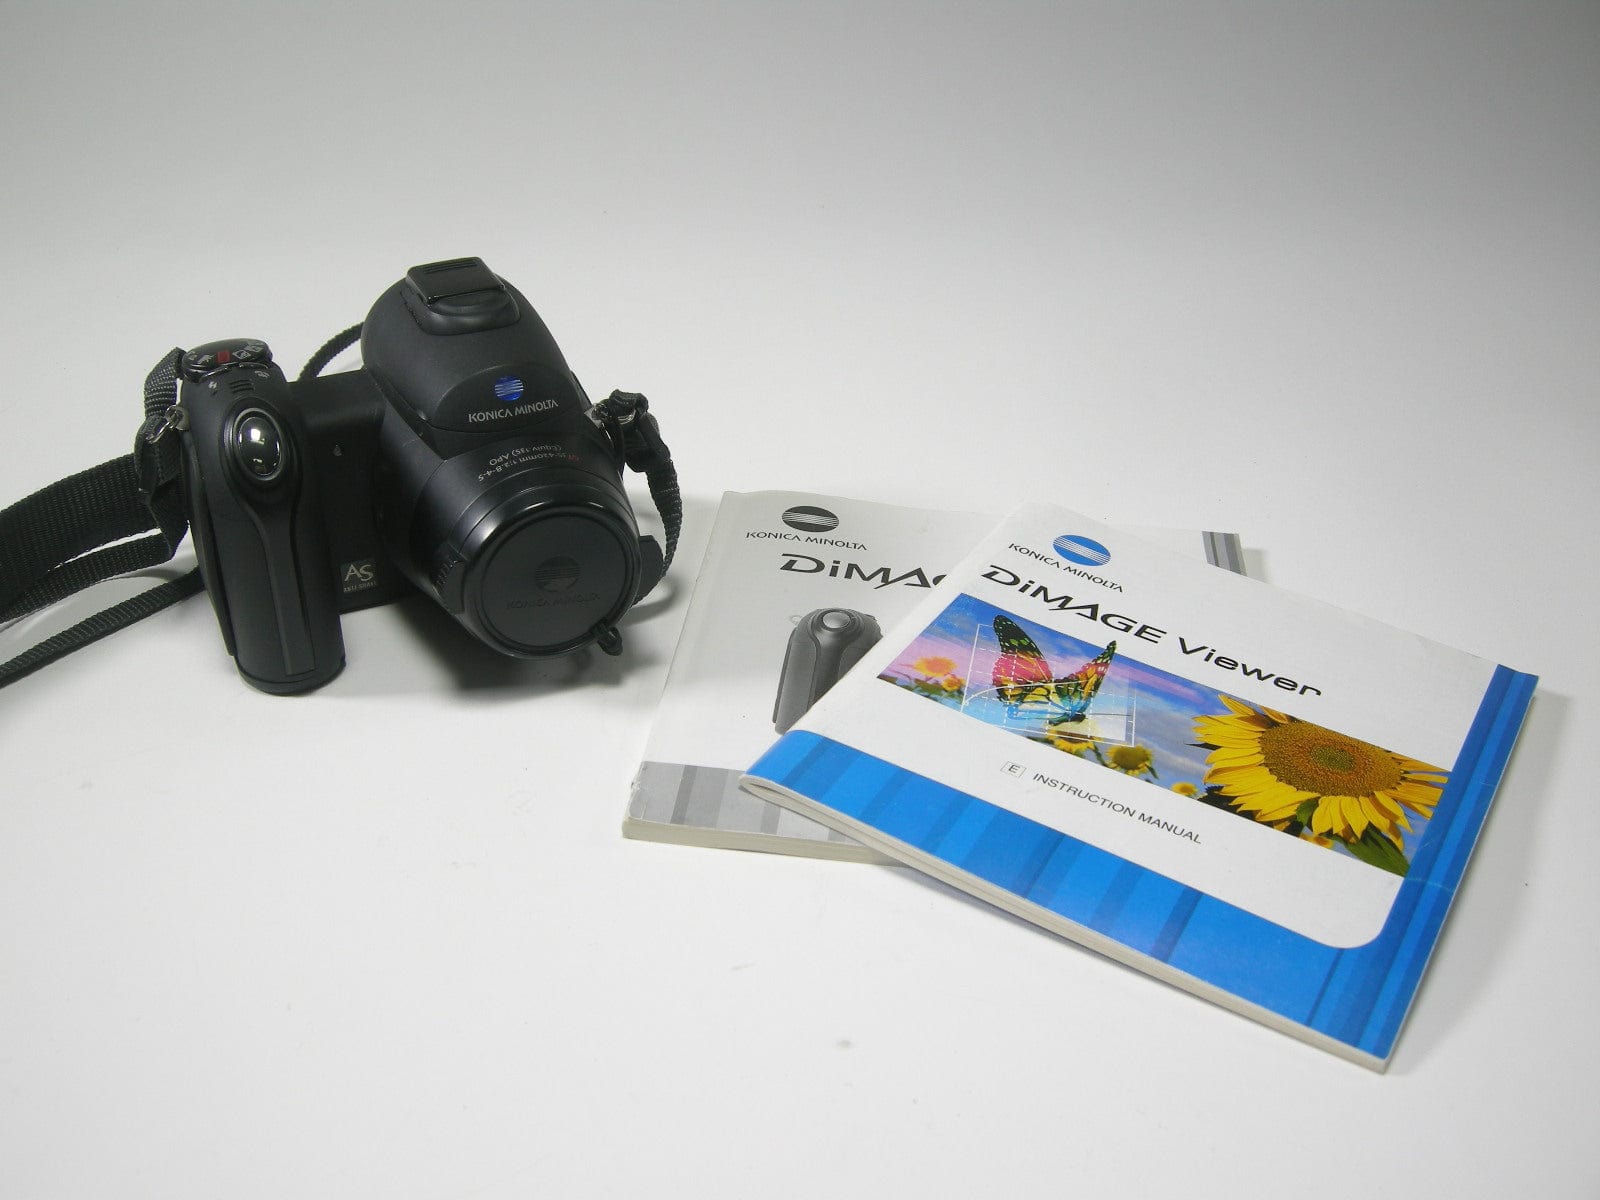 Konica-Minolta DiMage Z3 4.0mp Digital camera